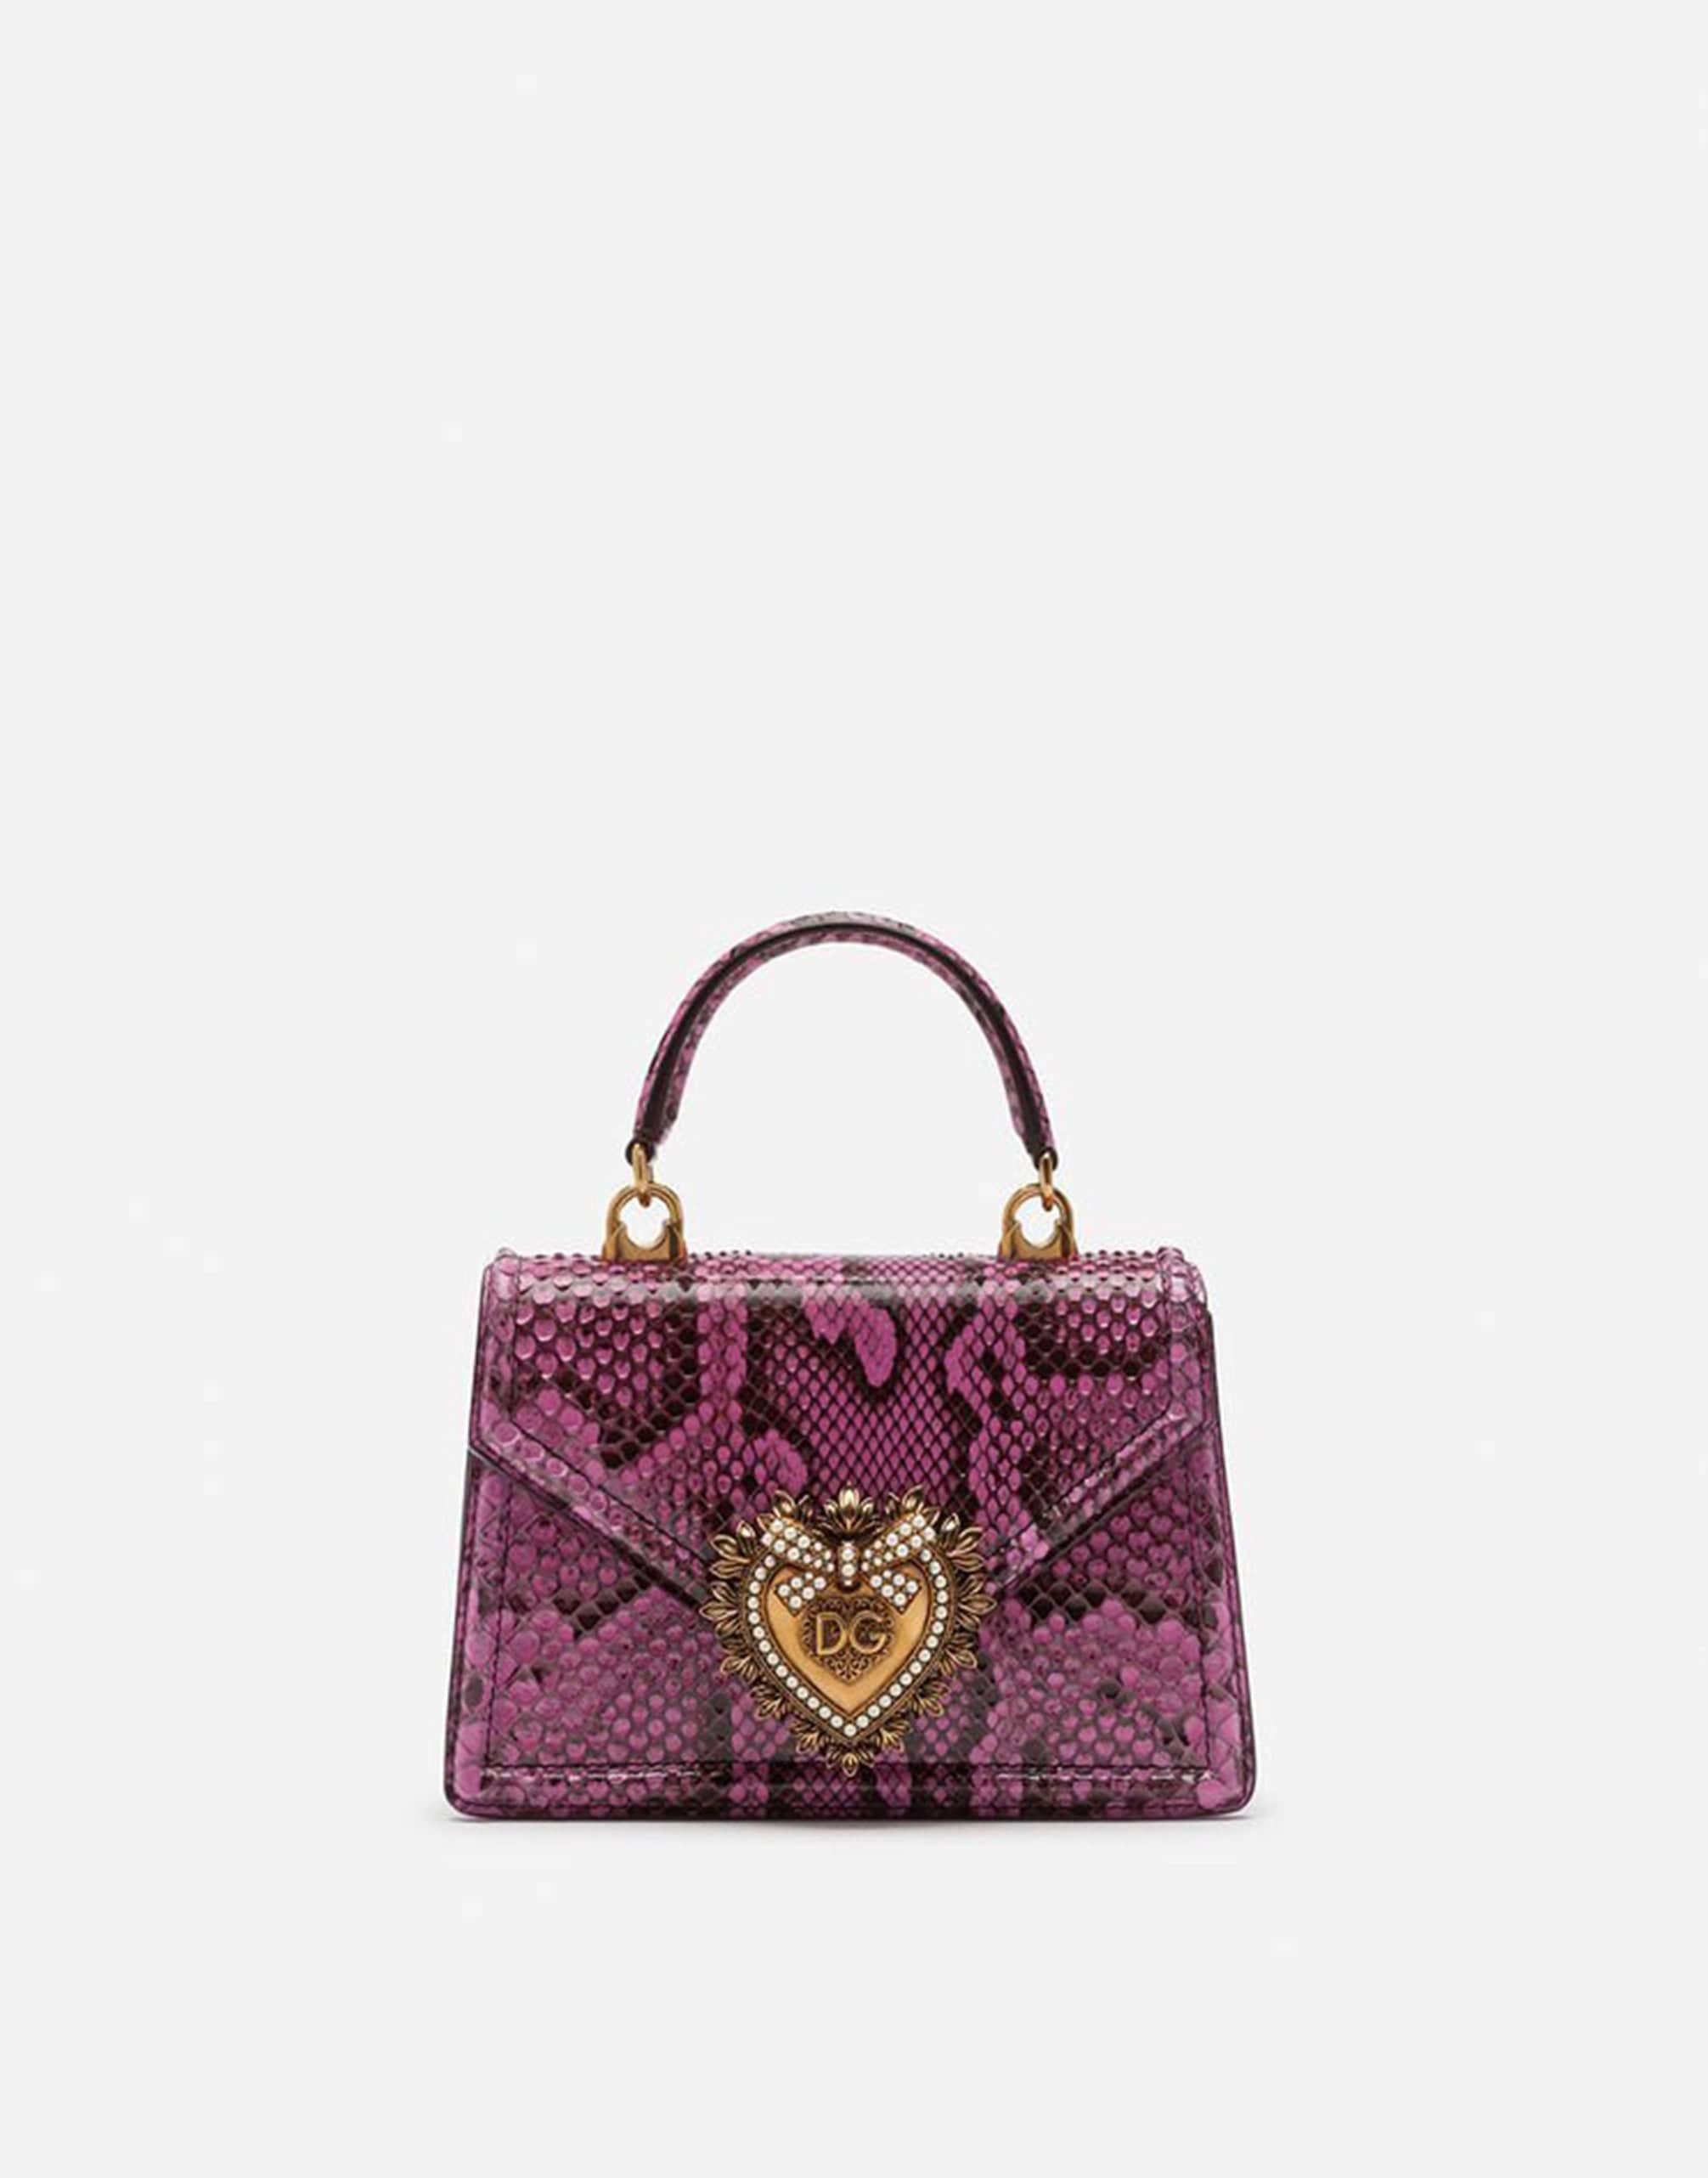 Dolce & Gabbana Small Devotion Handbag In Python